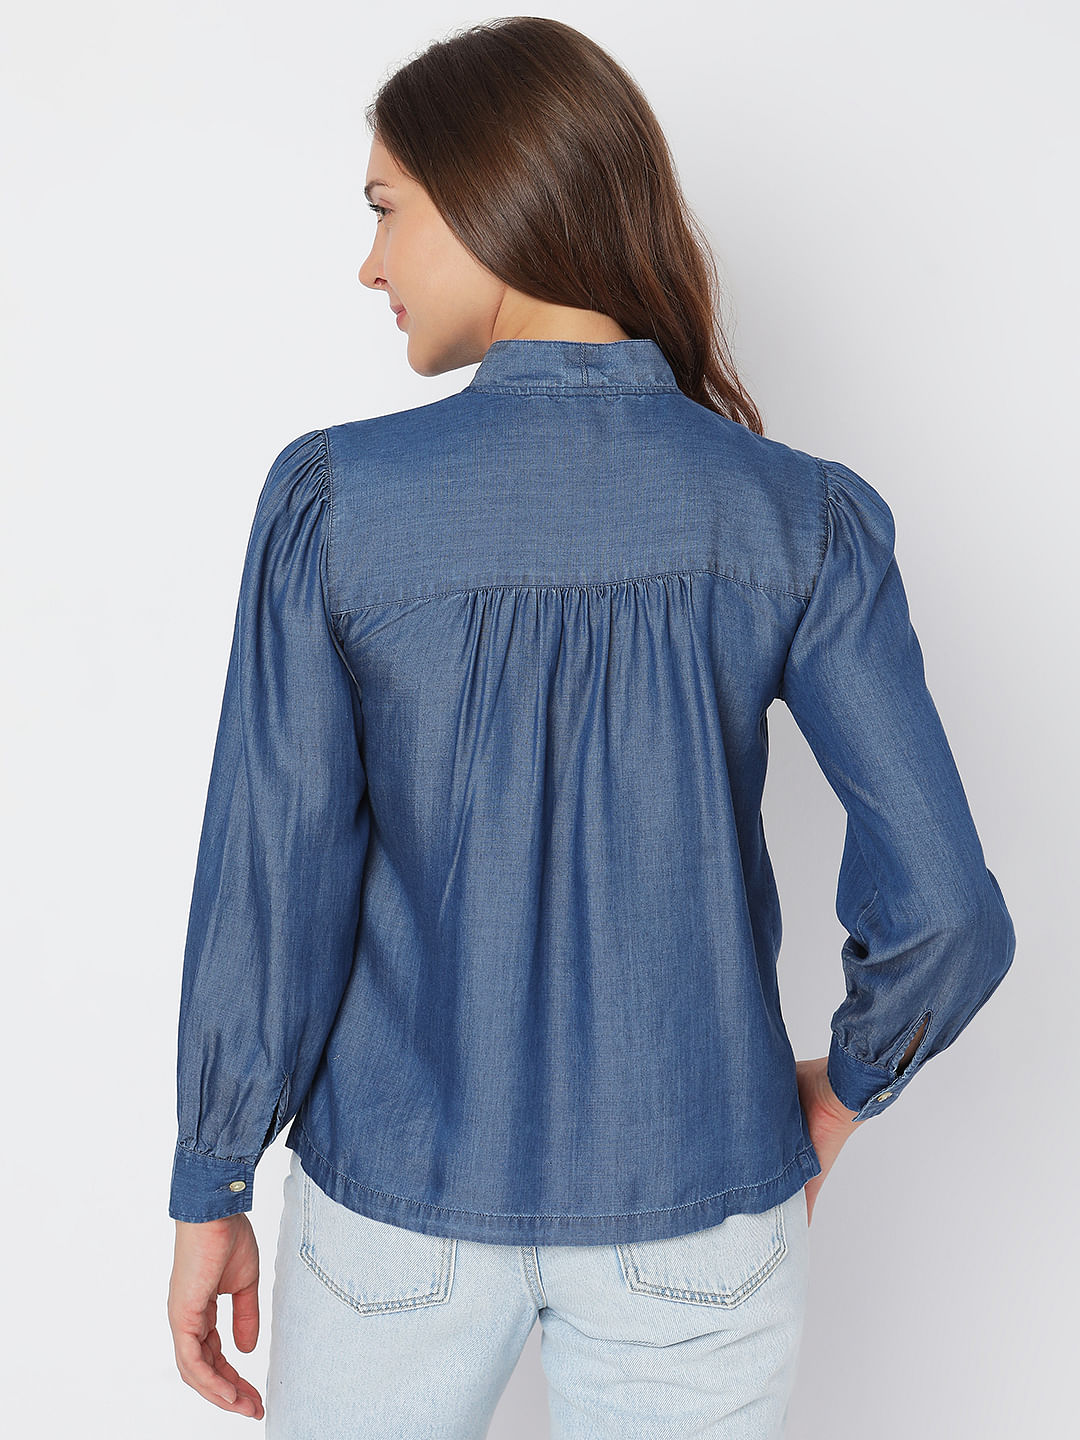 Buy Lady Bird Women Half Sleeve Solid Denim Shirt Top, Light Blue, X-Large  Size at Amazon.in